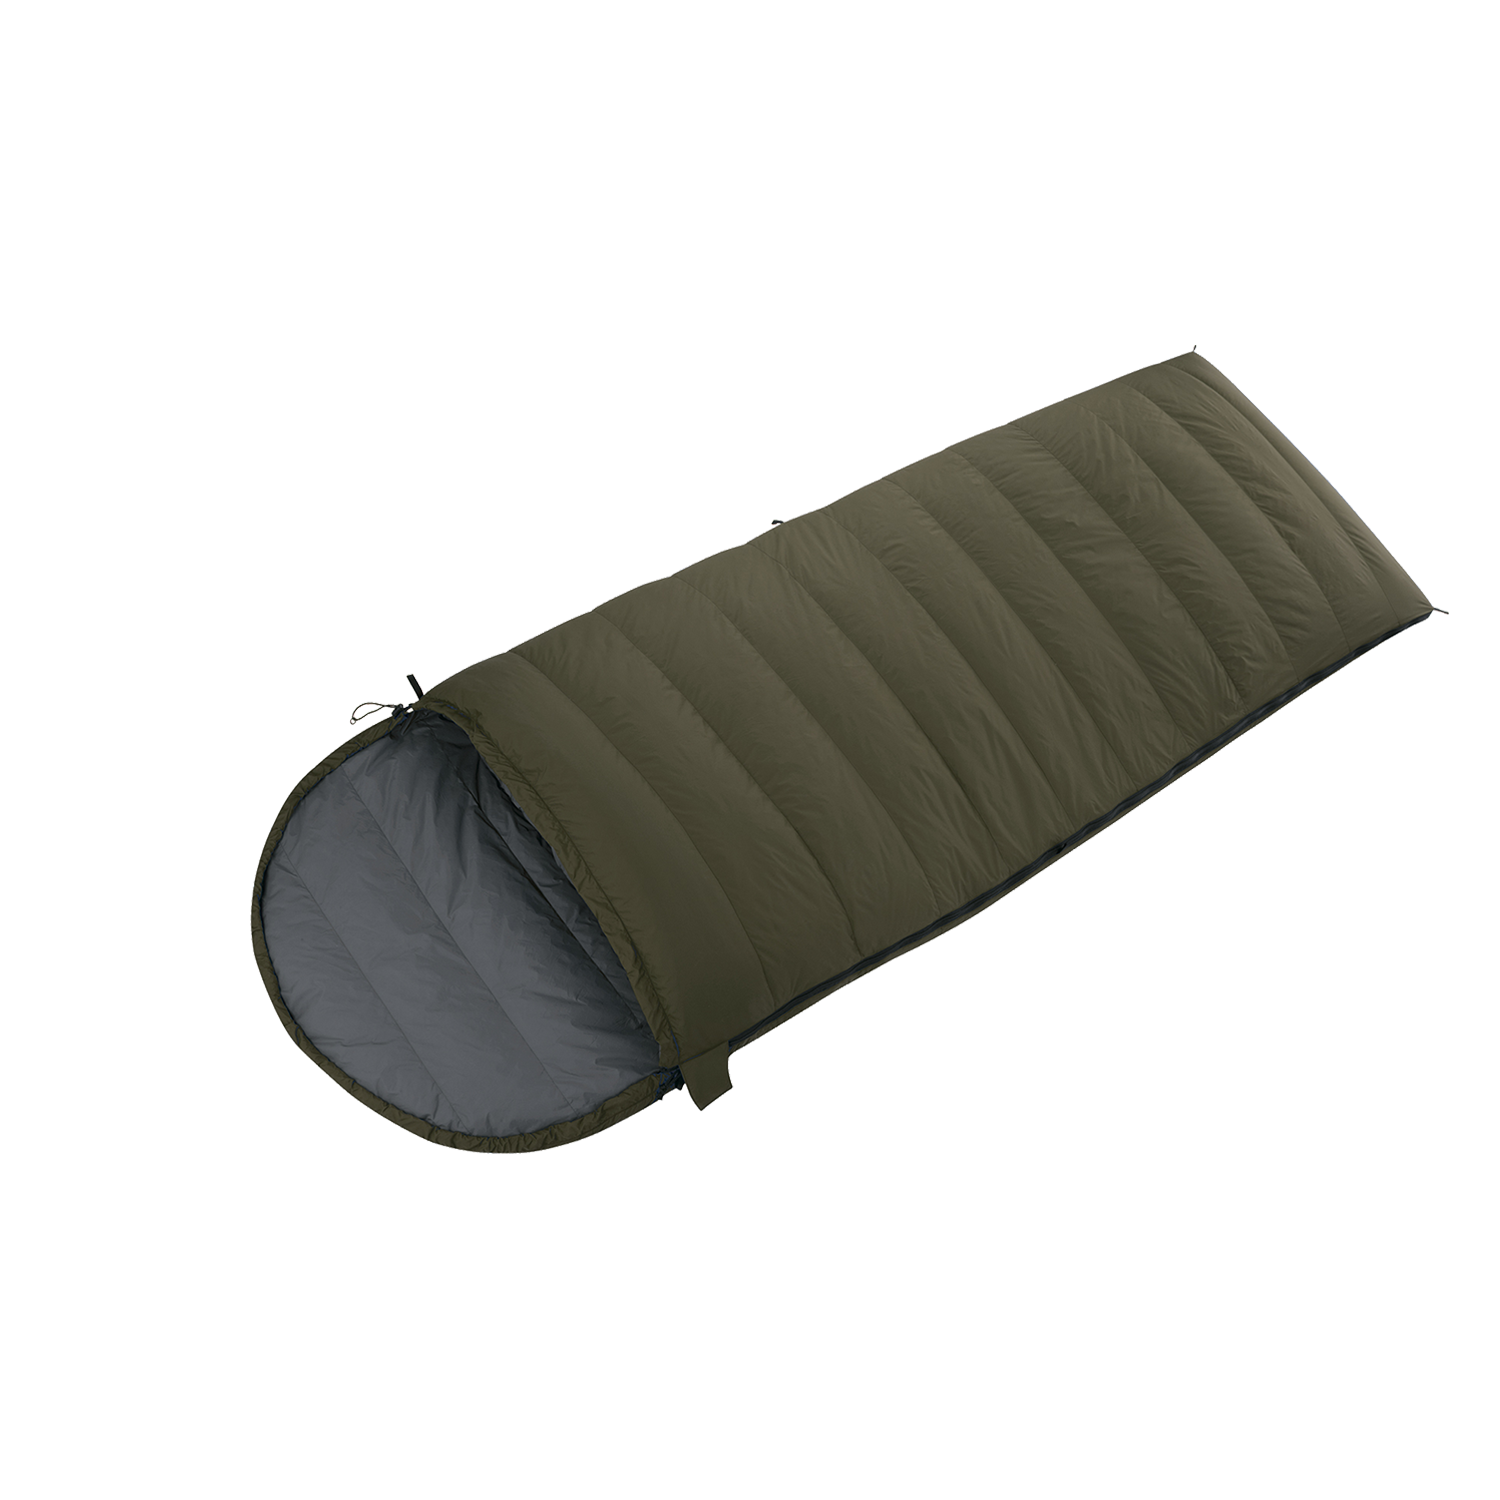 Спальный мешок BASK, размер 22х55, цвет черный 3541-80915-R Blanket pro v2 xl - фото 1